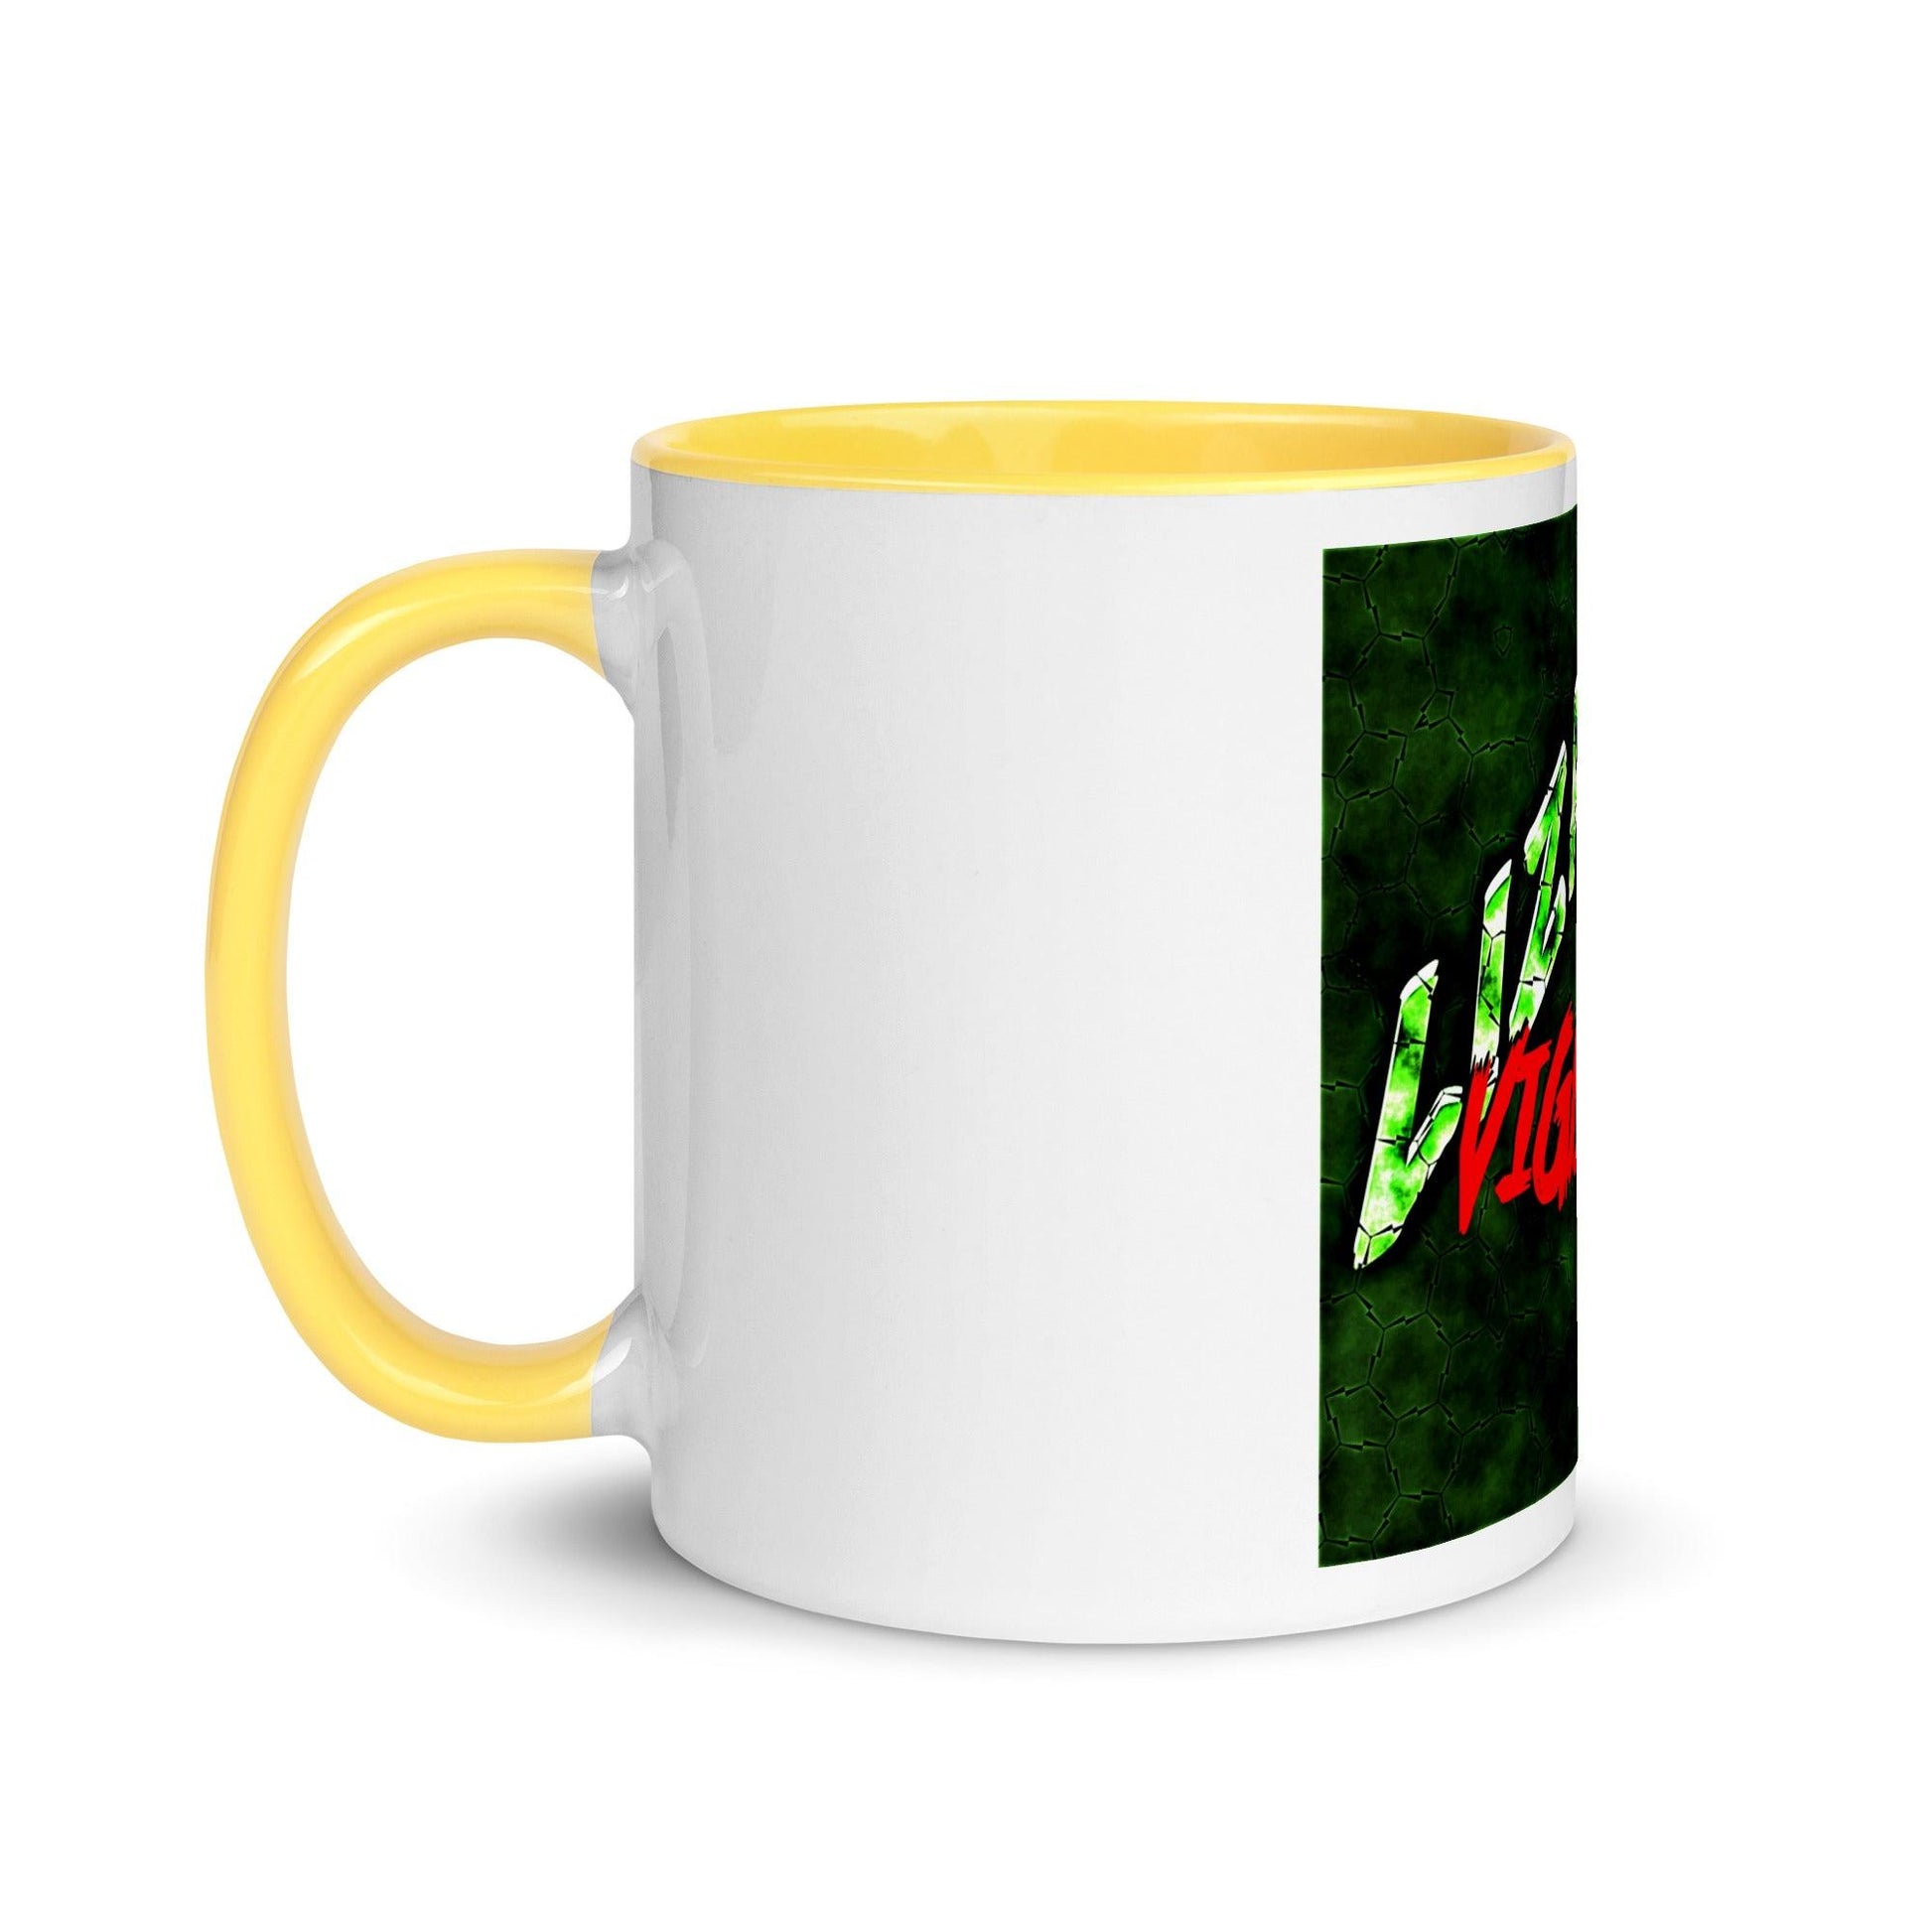 Lizard Vigilante Mug with Yellow Inside! Coffee Cup With the Liz Logo - Lizard Vigilante